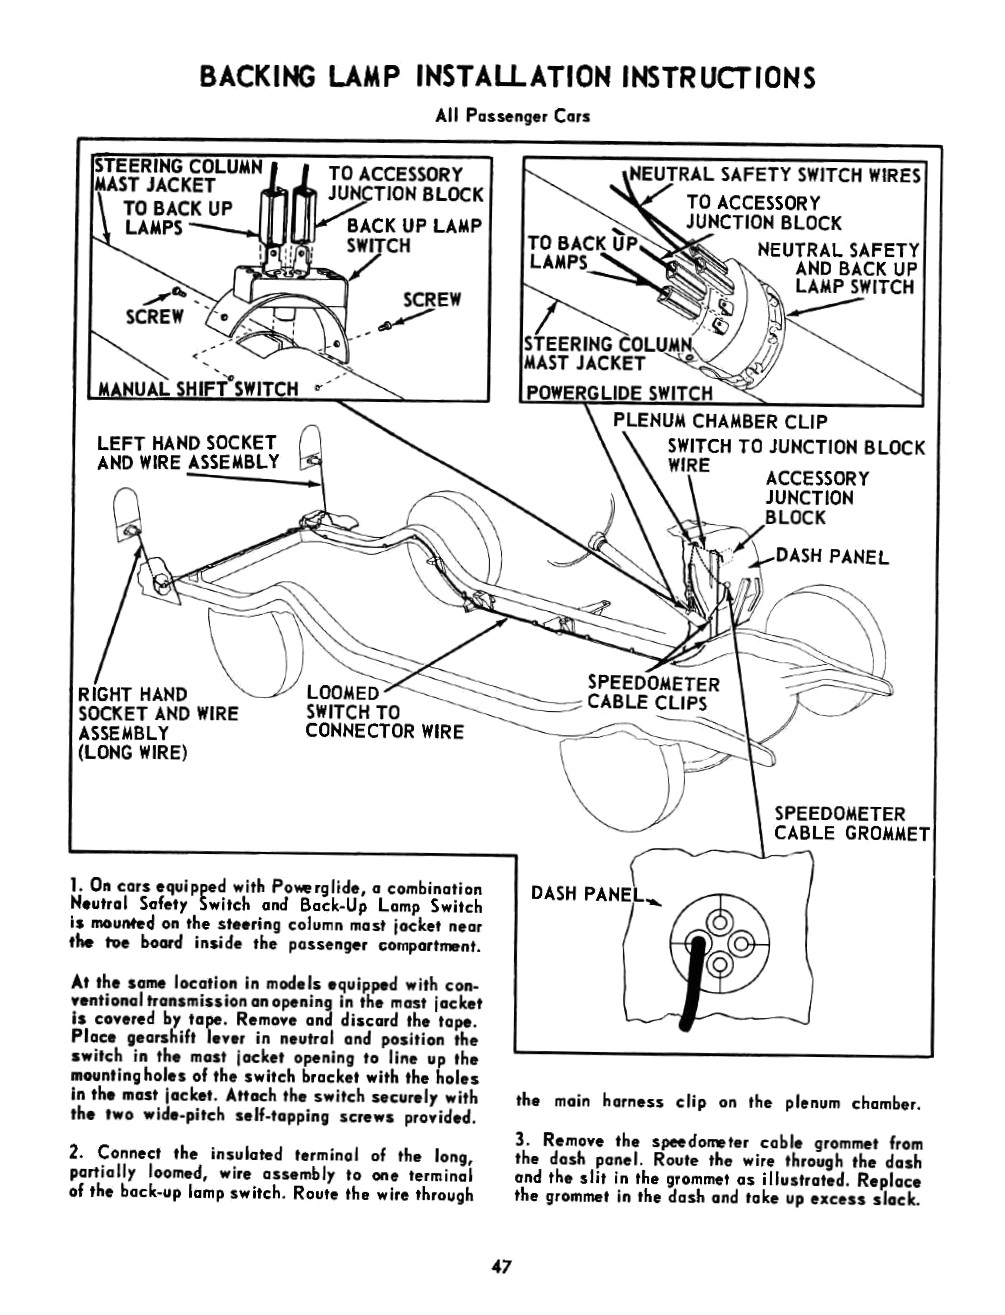 1955_Chevrolet_Acc_Manual-47